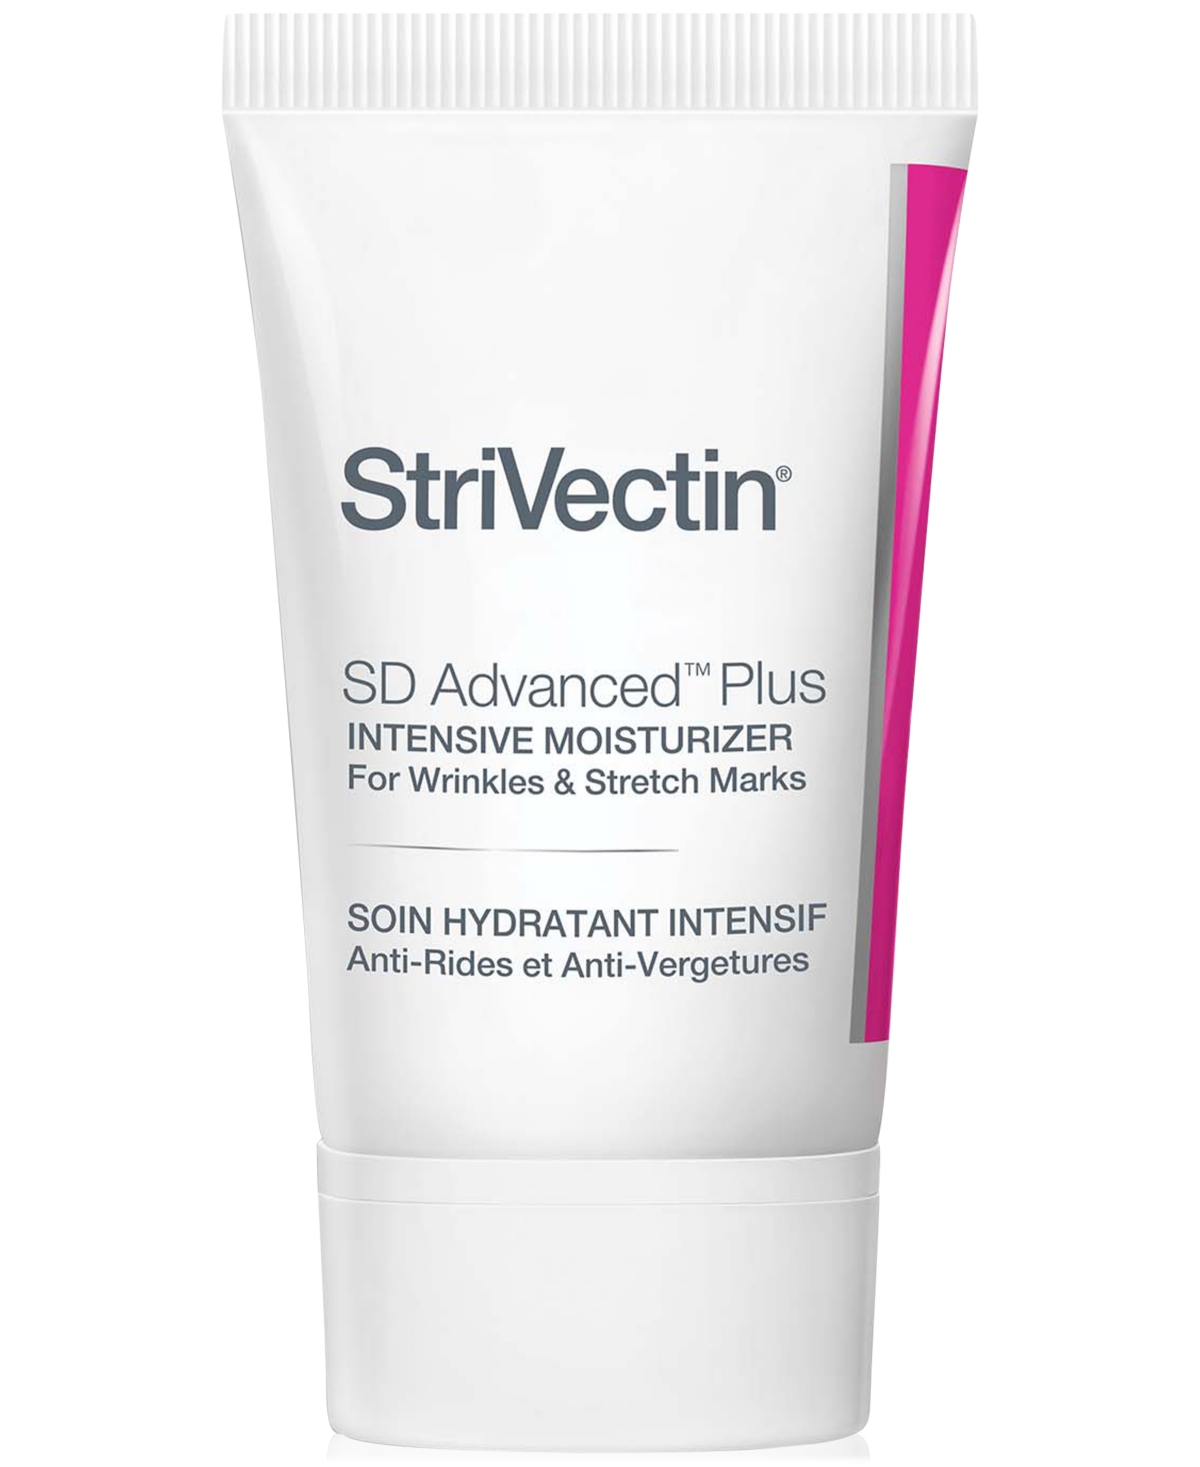 Sd Advanced Plus Intensive Moisturizer For Wrinkles & Stretch Marks, 2 oz.